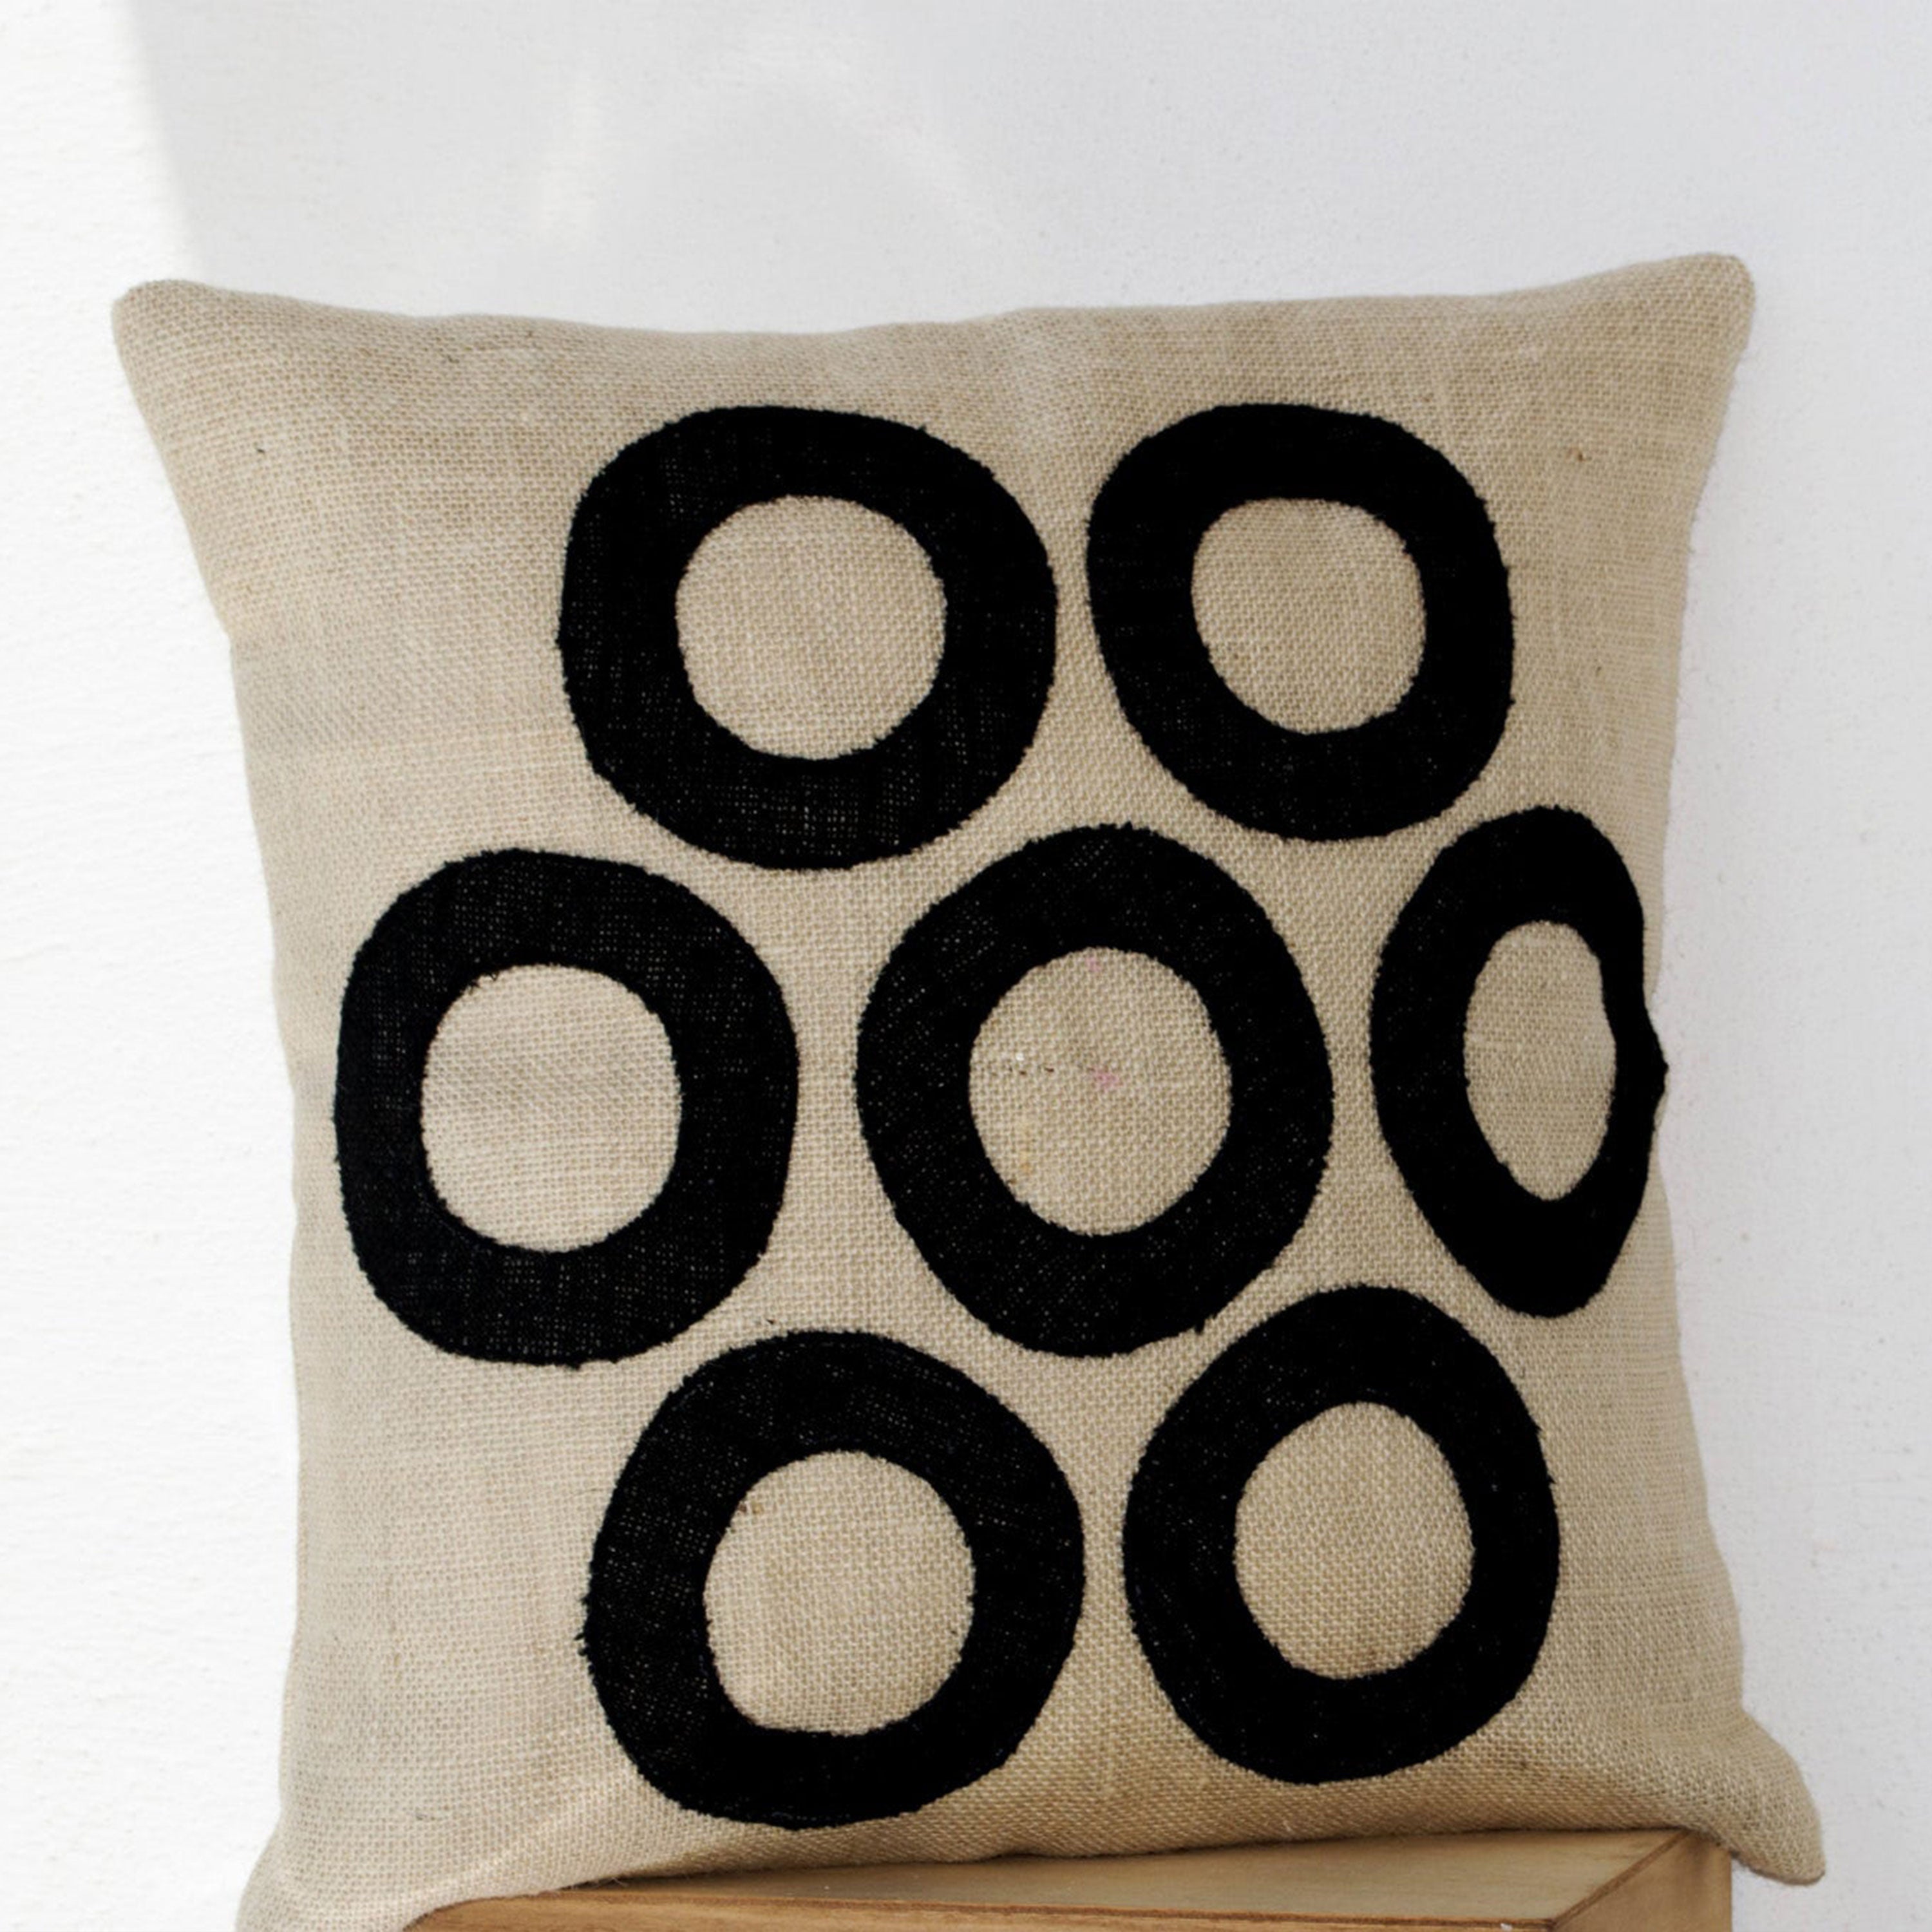 Ivory Pillows - Black Geometric Throw Pillows  - Burlap Pillow - Decorative applique cushion cover- Cream Black pillow - gift pillow 16X16